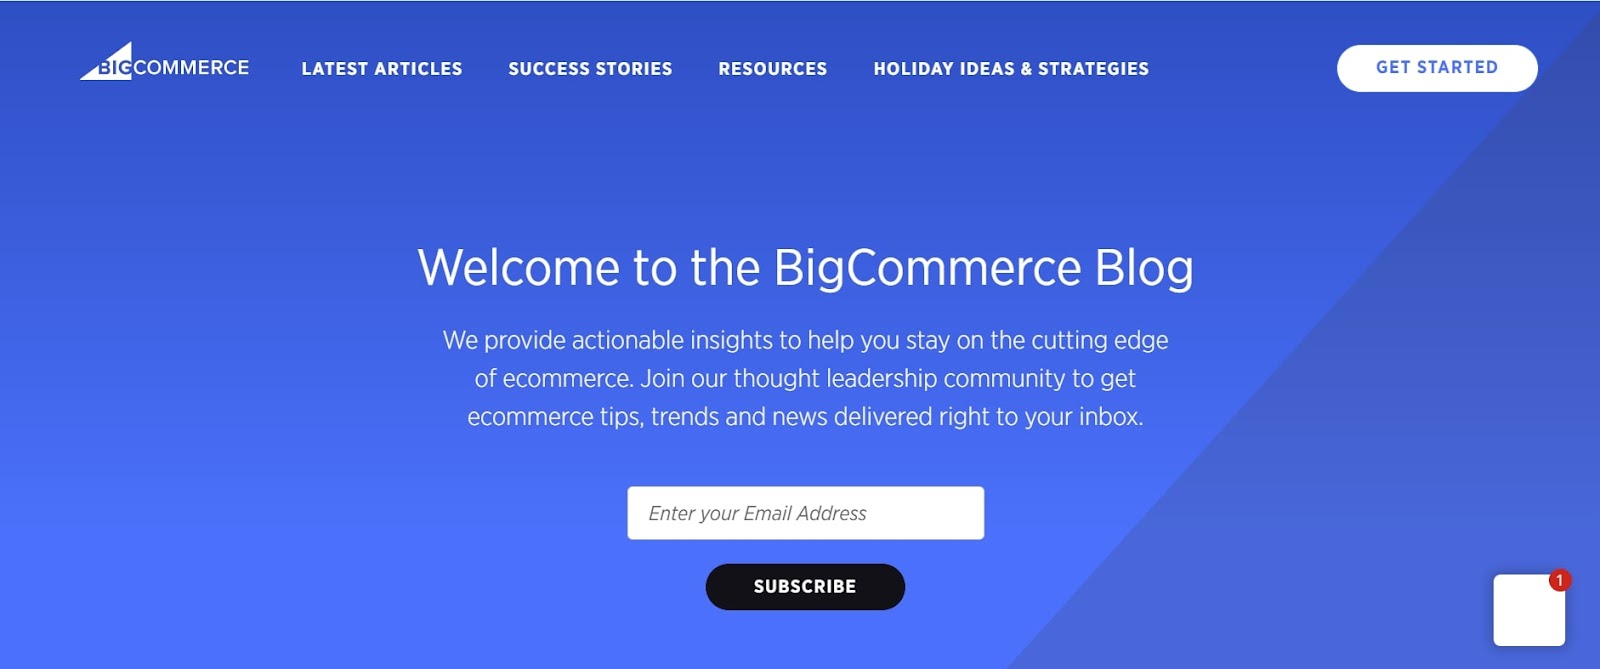 bigcommerce blog